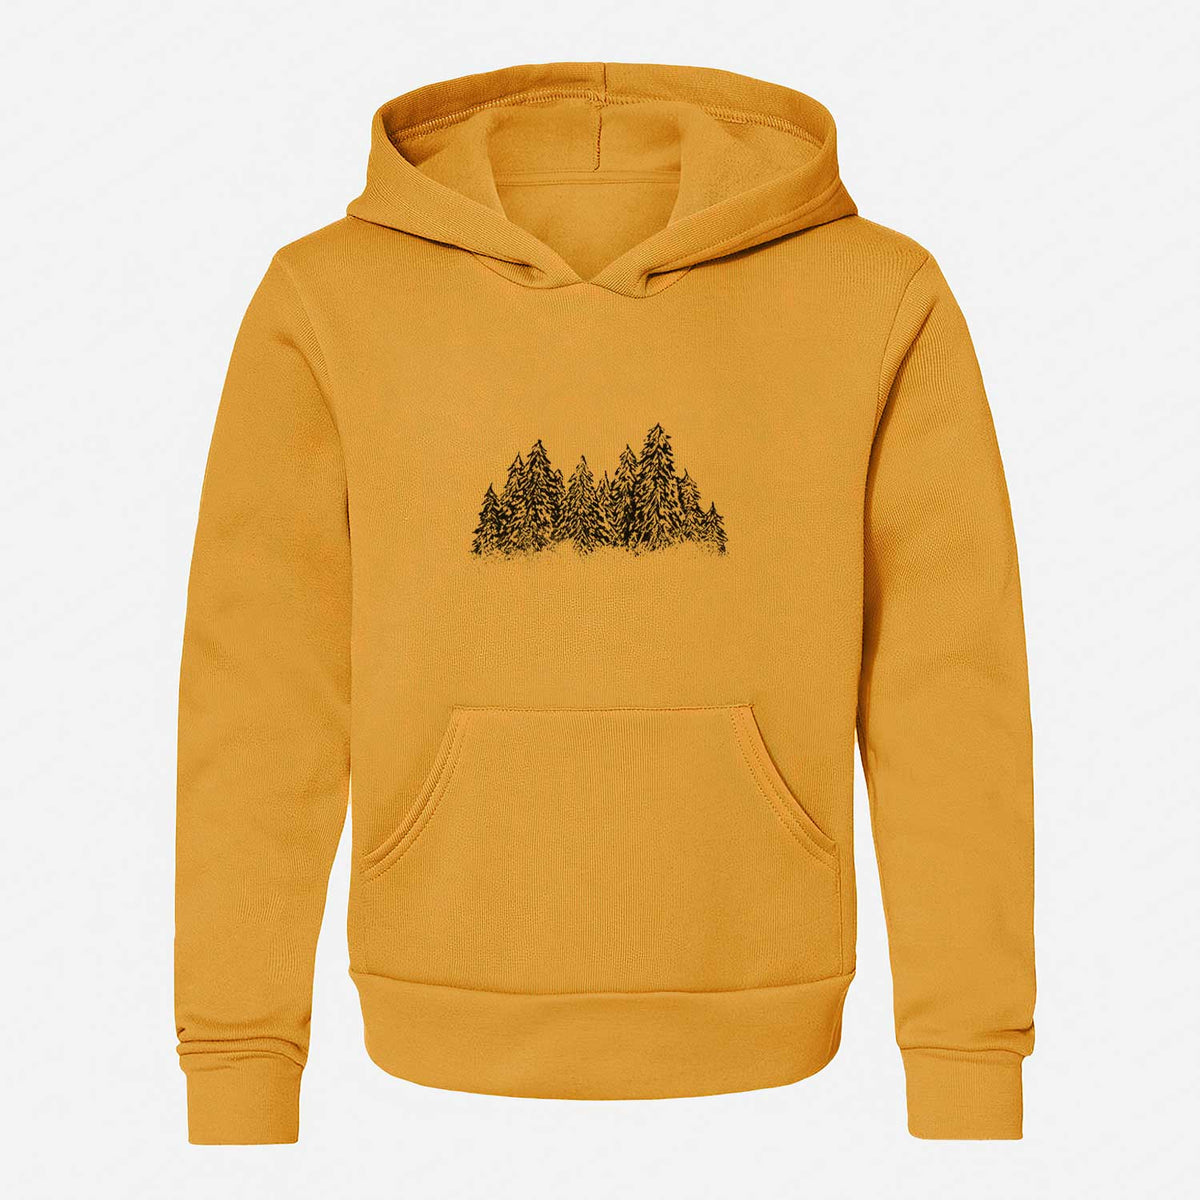 Winter Evergreens - Youth Hoodie Sweatshirt